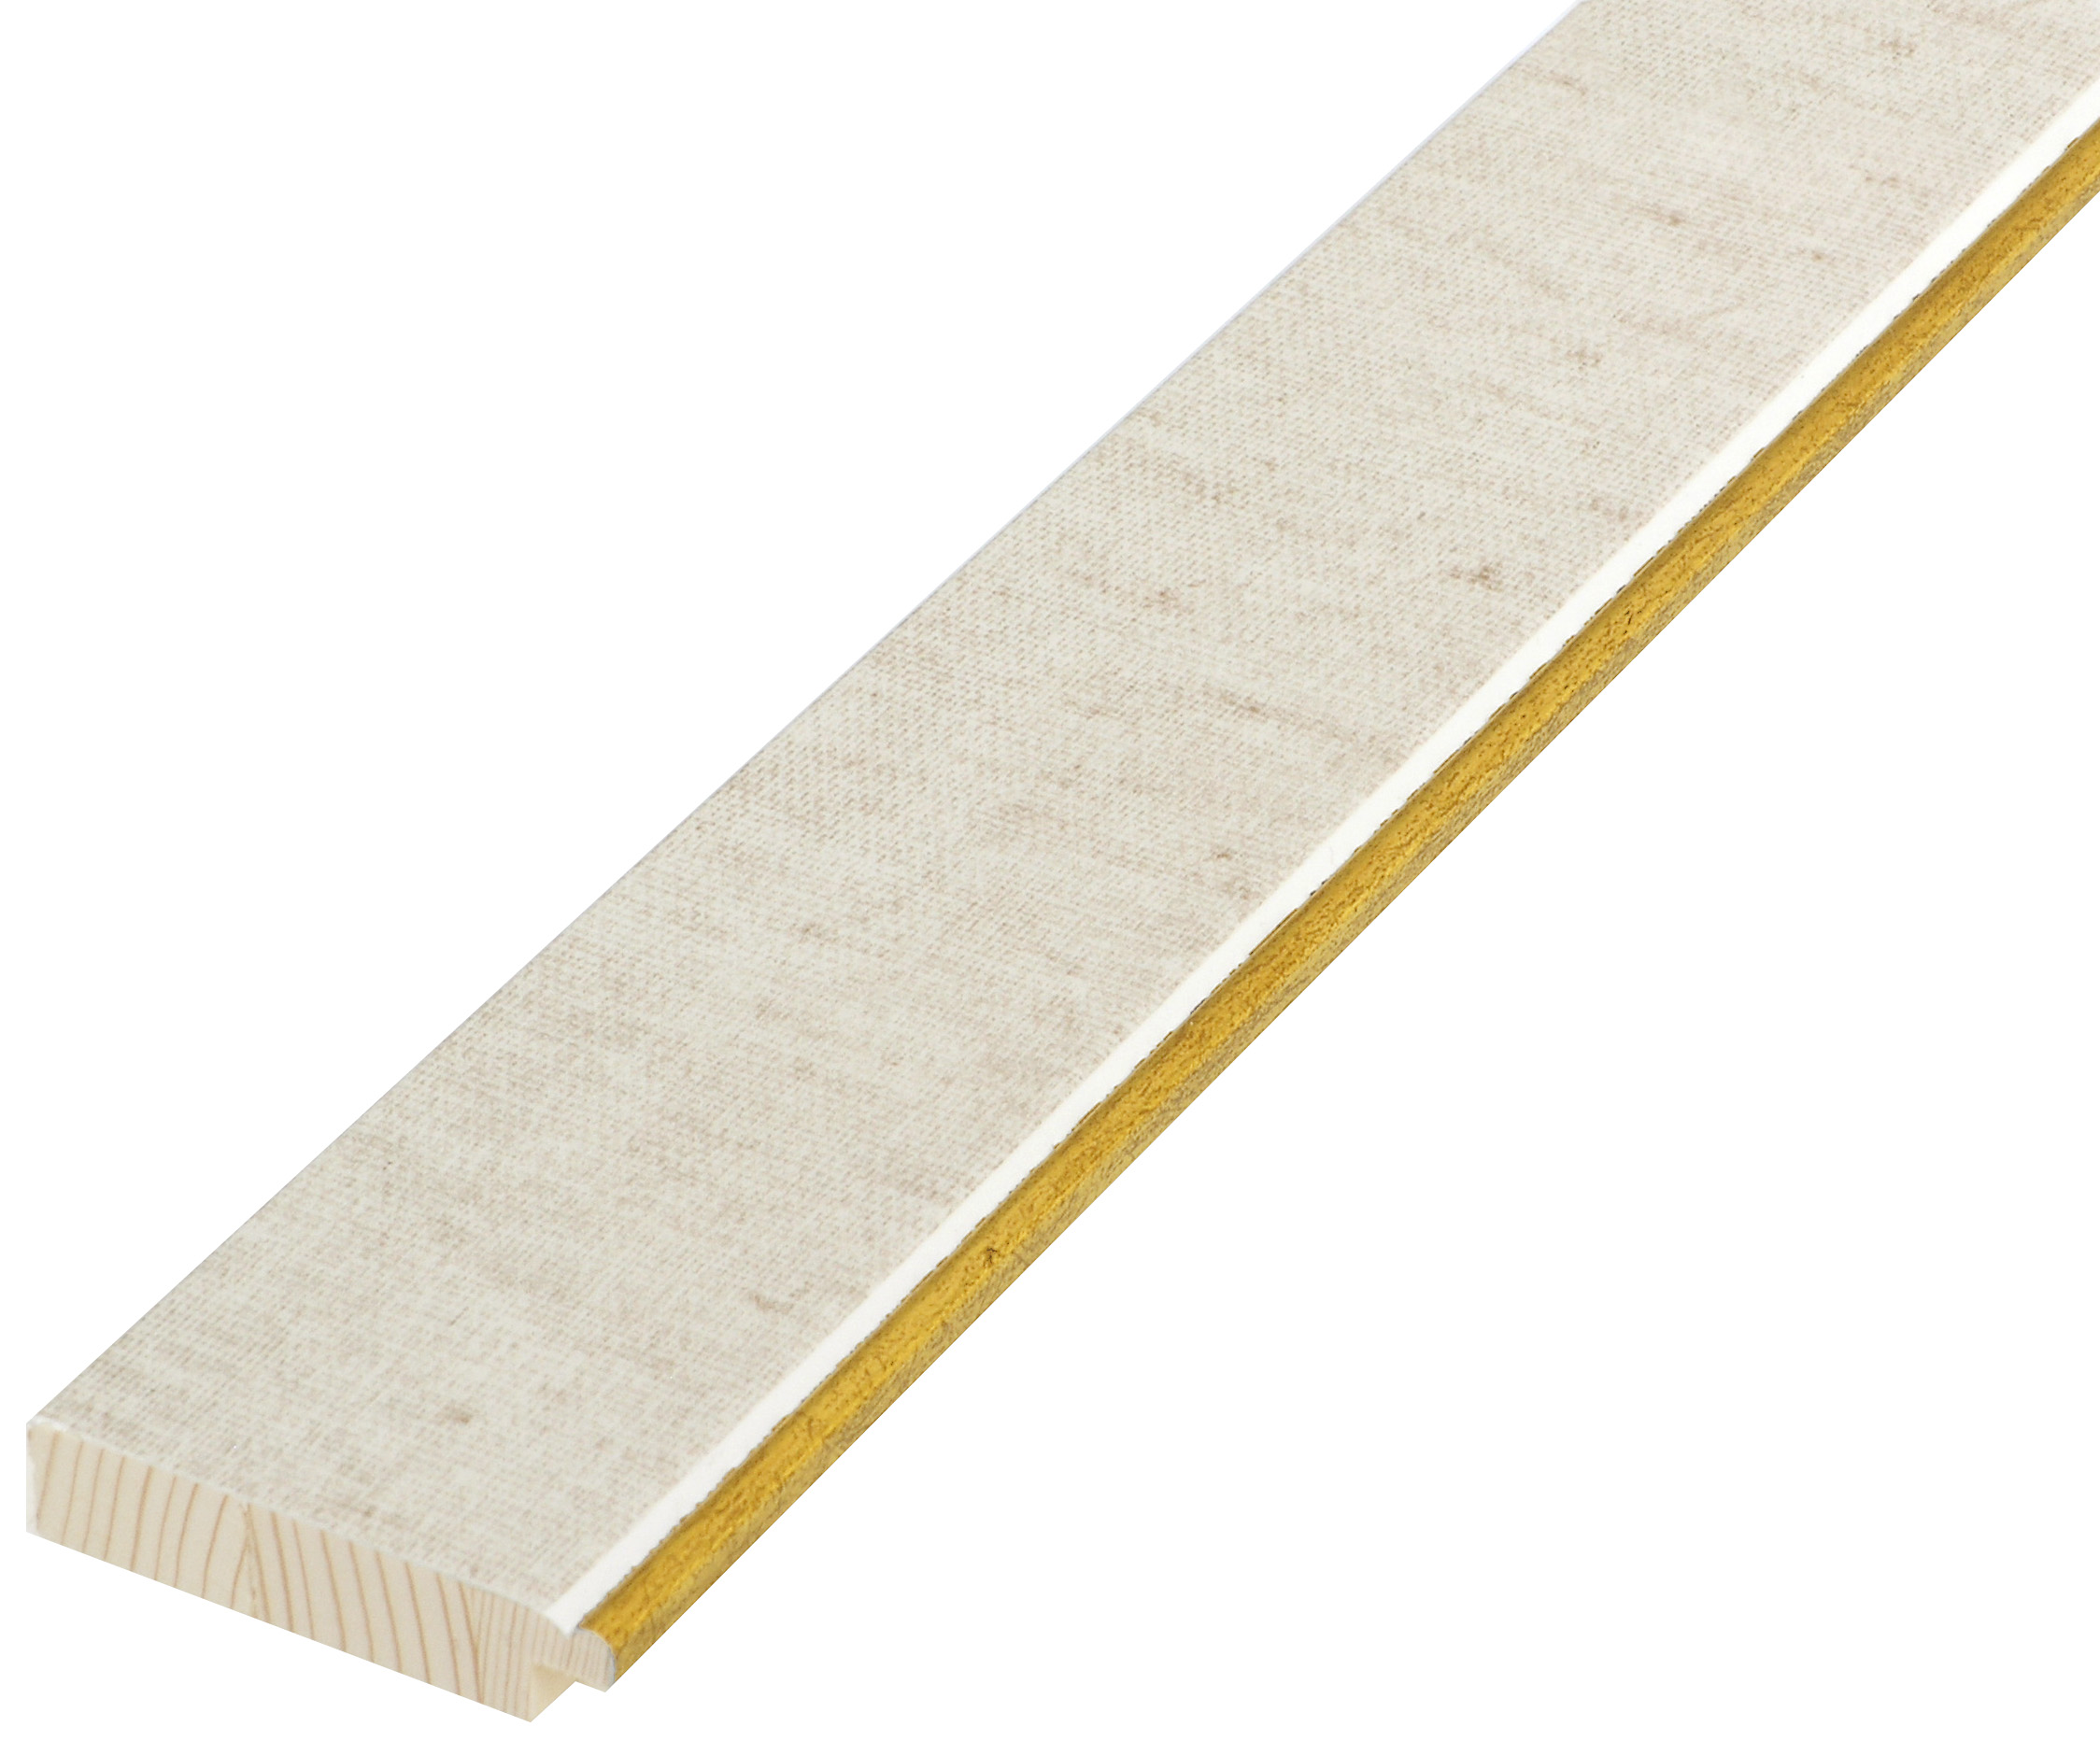 Liner lamellar pine 45mm - flat, fabric effect, gold edge - 45PT